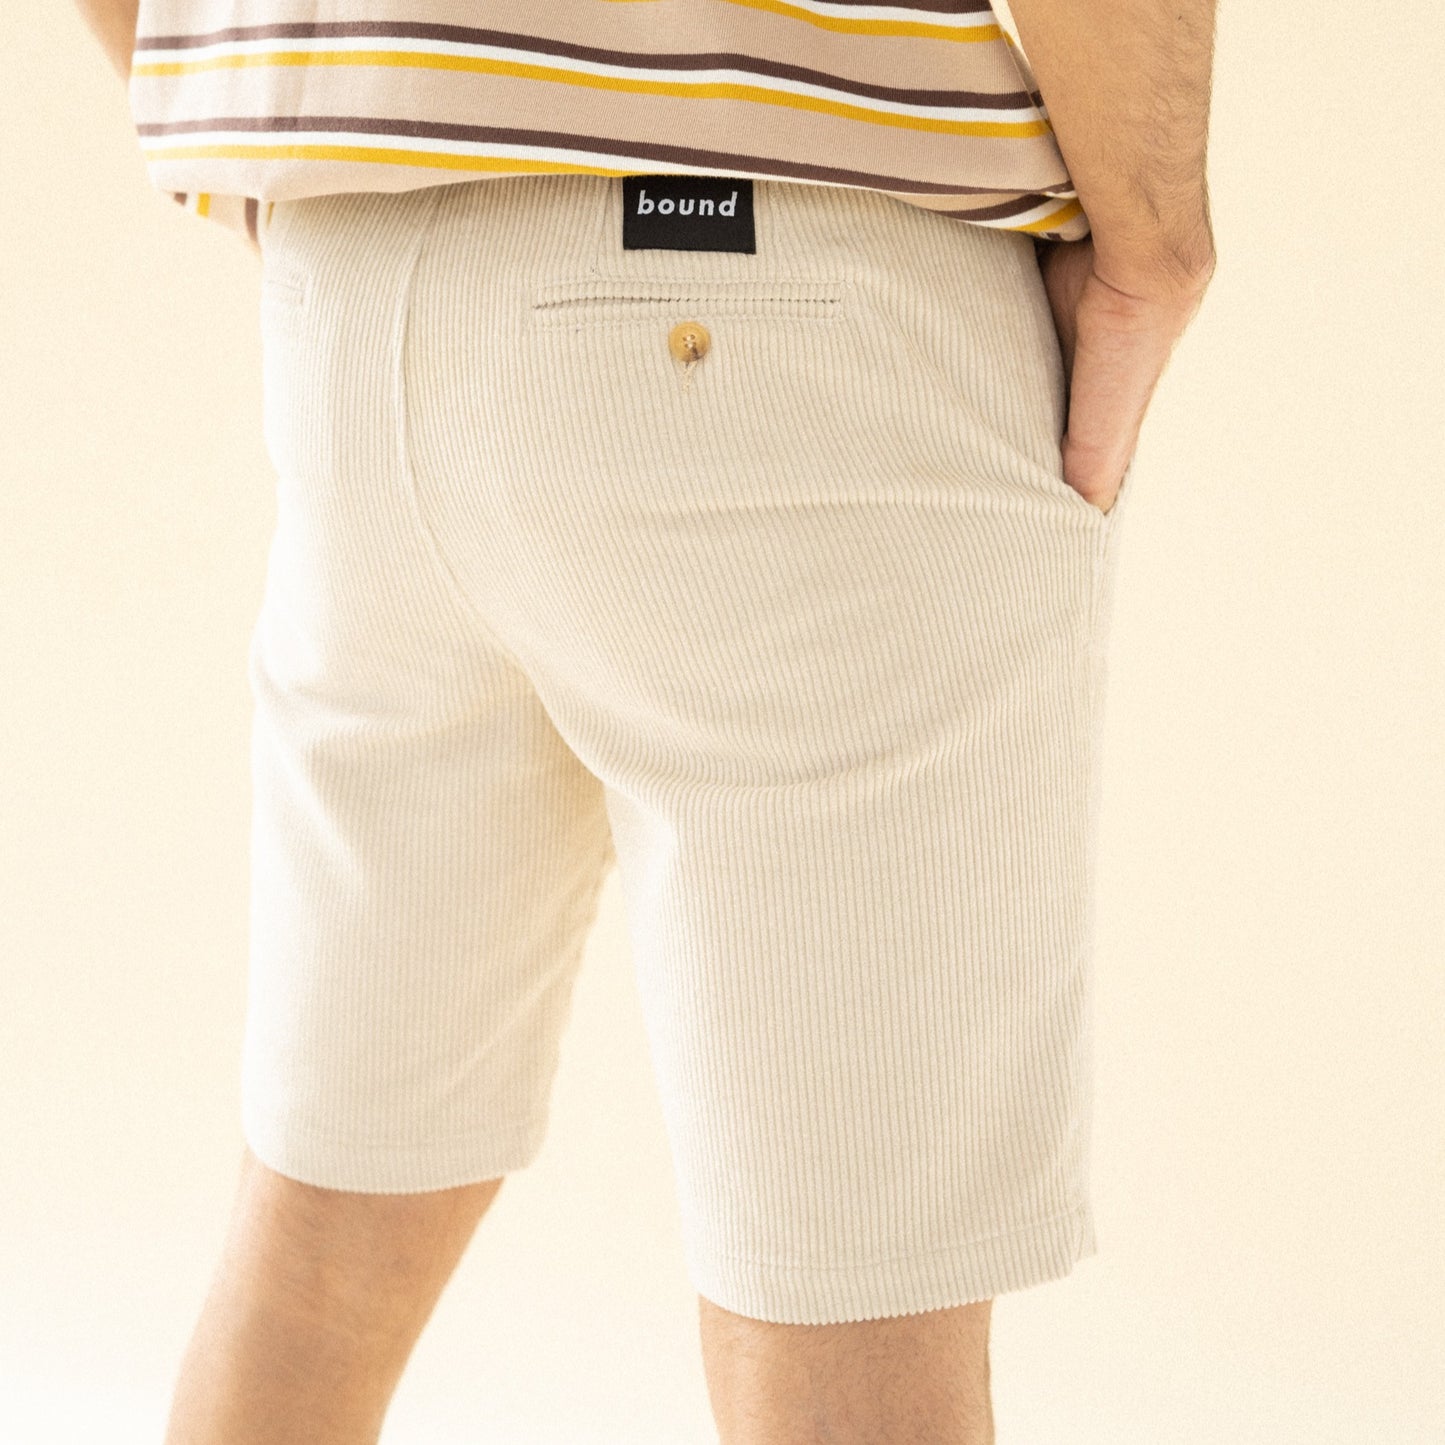 bound 'Cream' Cord Shorts